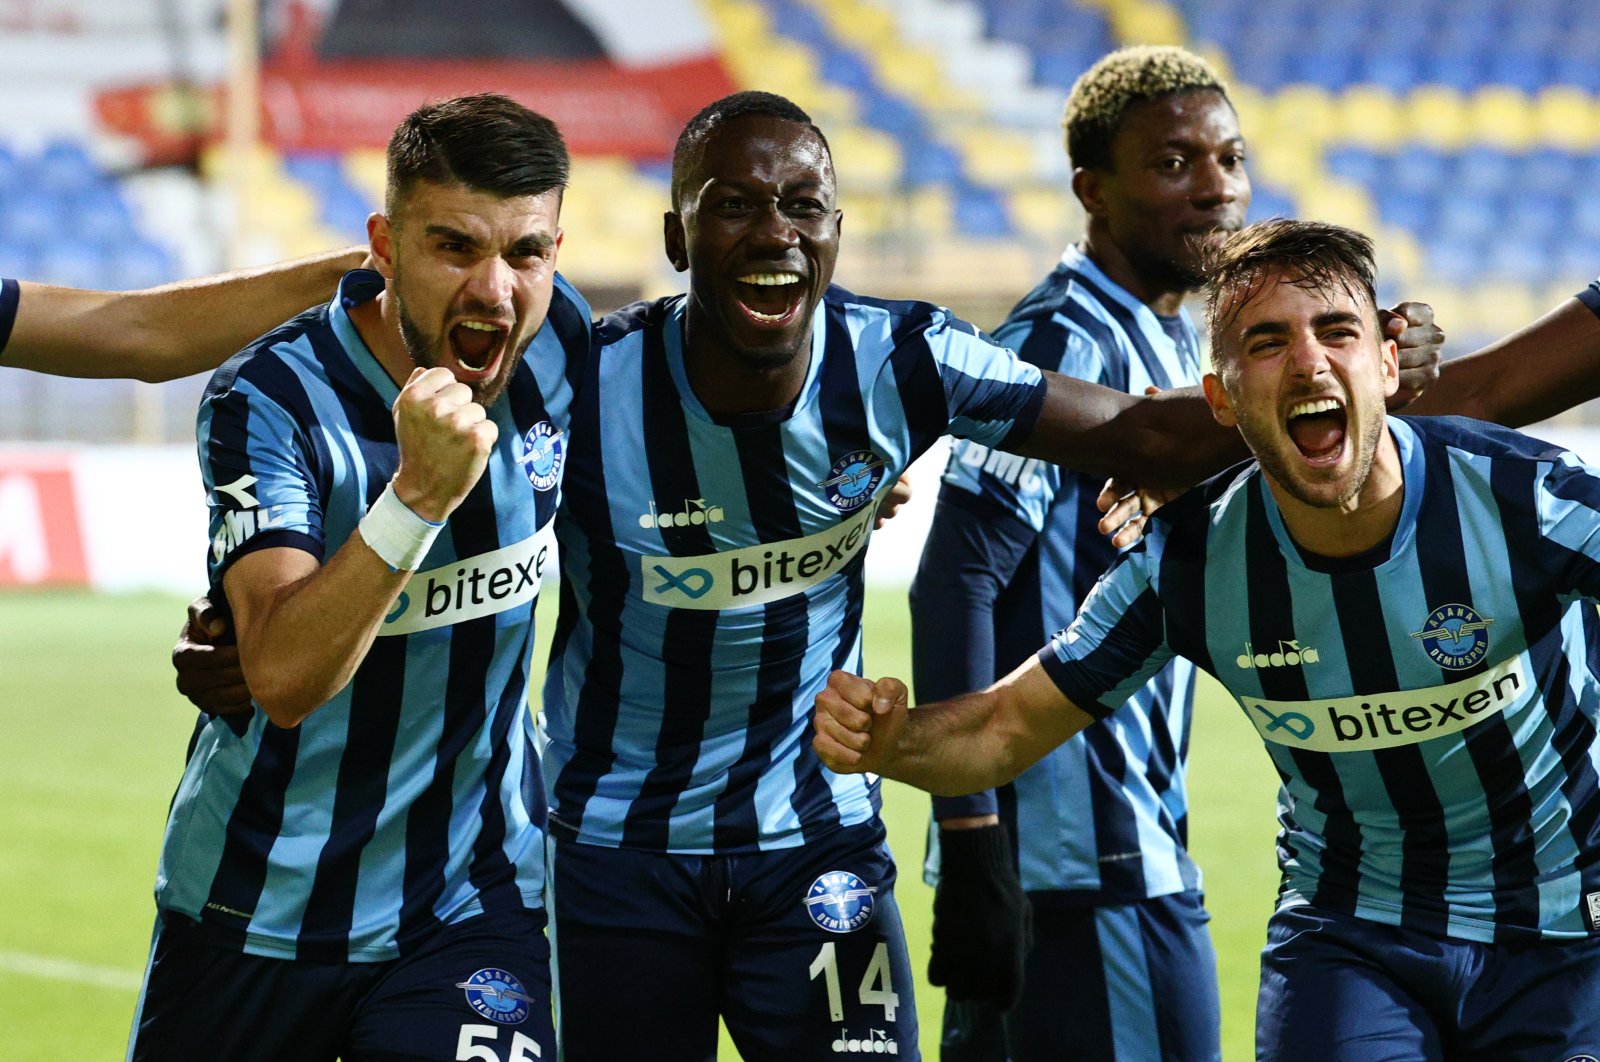 Adana Demirspor players celebrate a goal against Menemenspor at the Menemen İlçe Stadium, Izmir, Turkey, May 9, 2021.